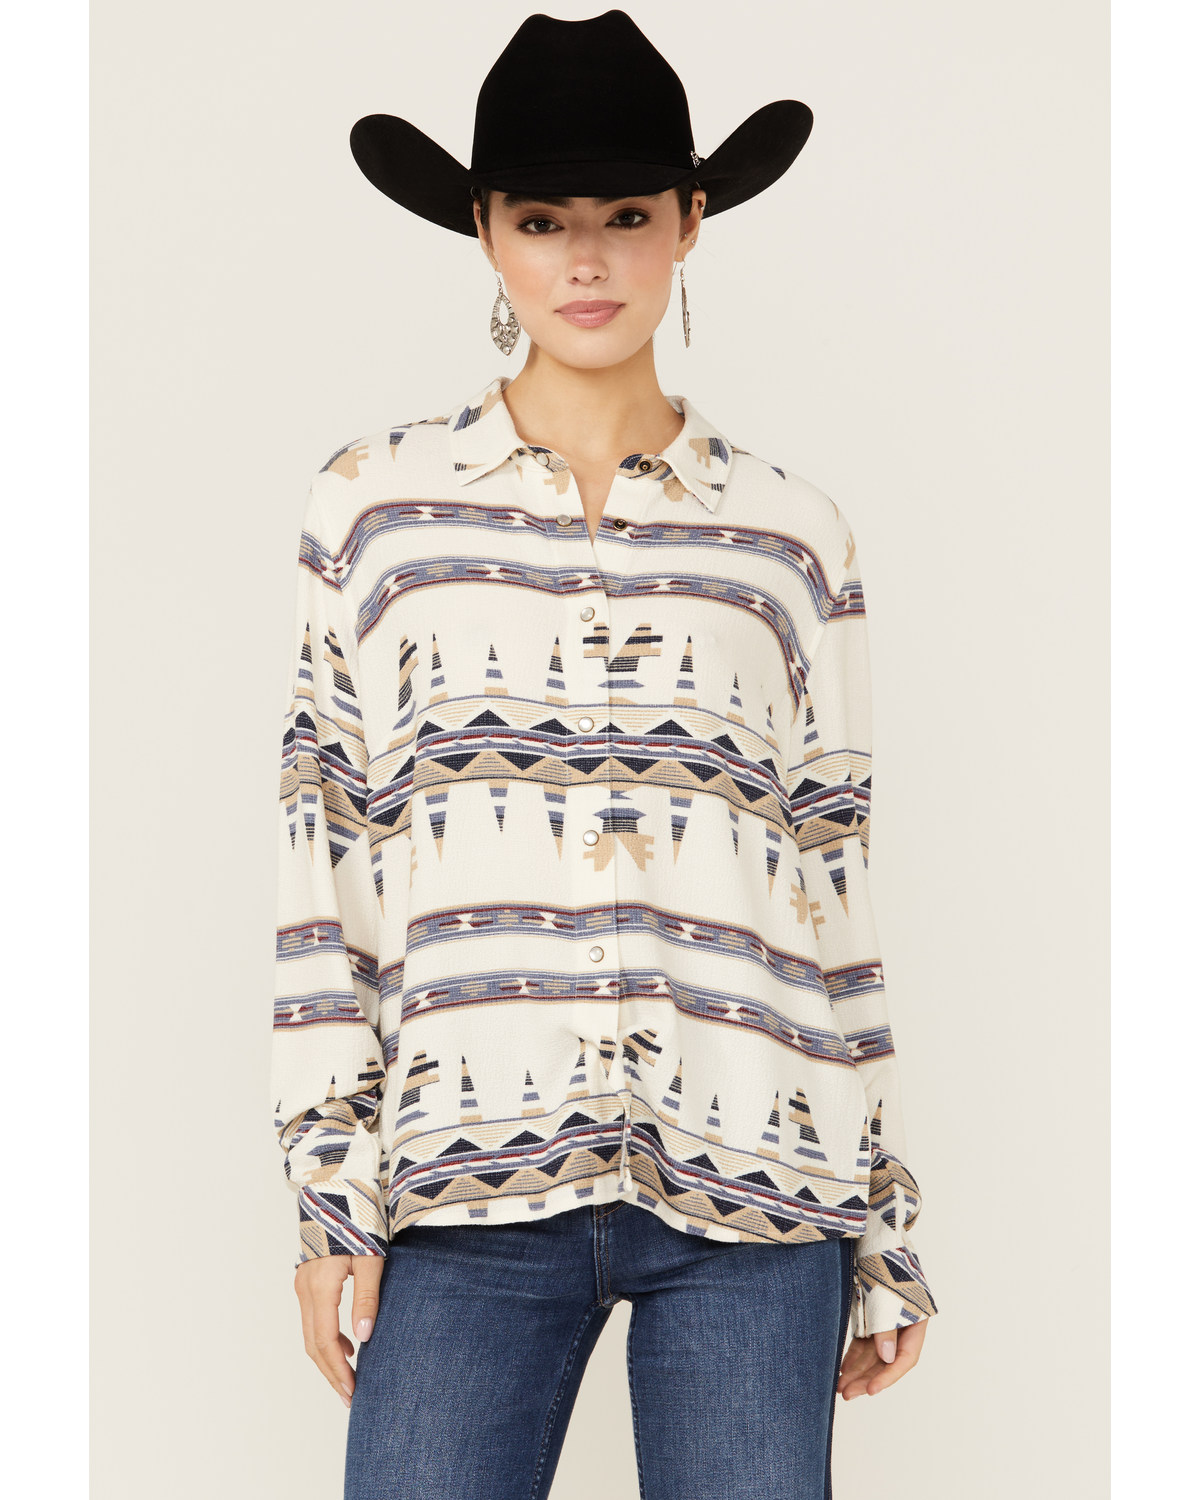 Idyllwind Women's Featherlight Printed Long Sleeve Pearl Snap Western Shirt